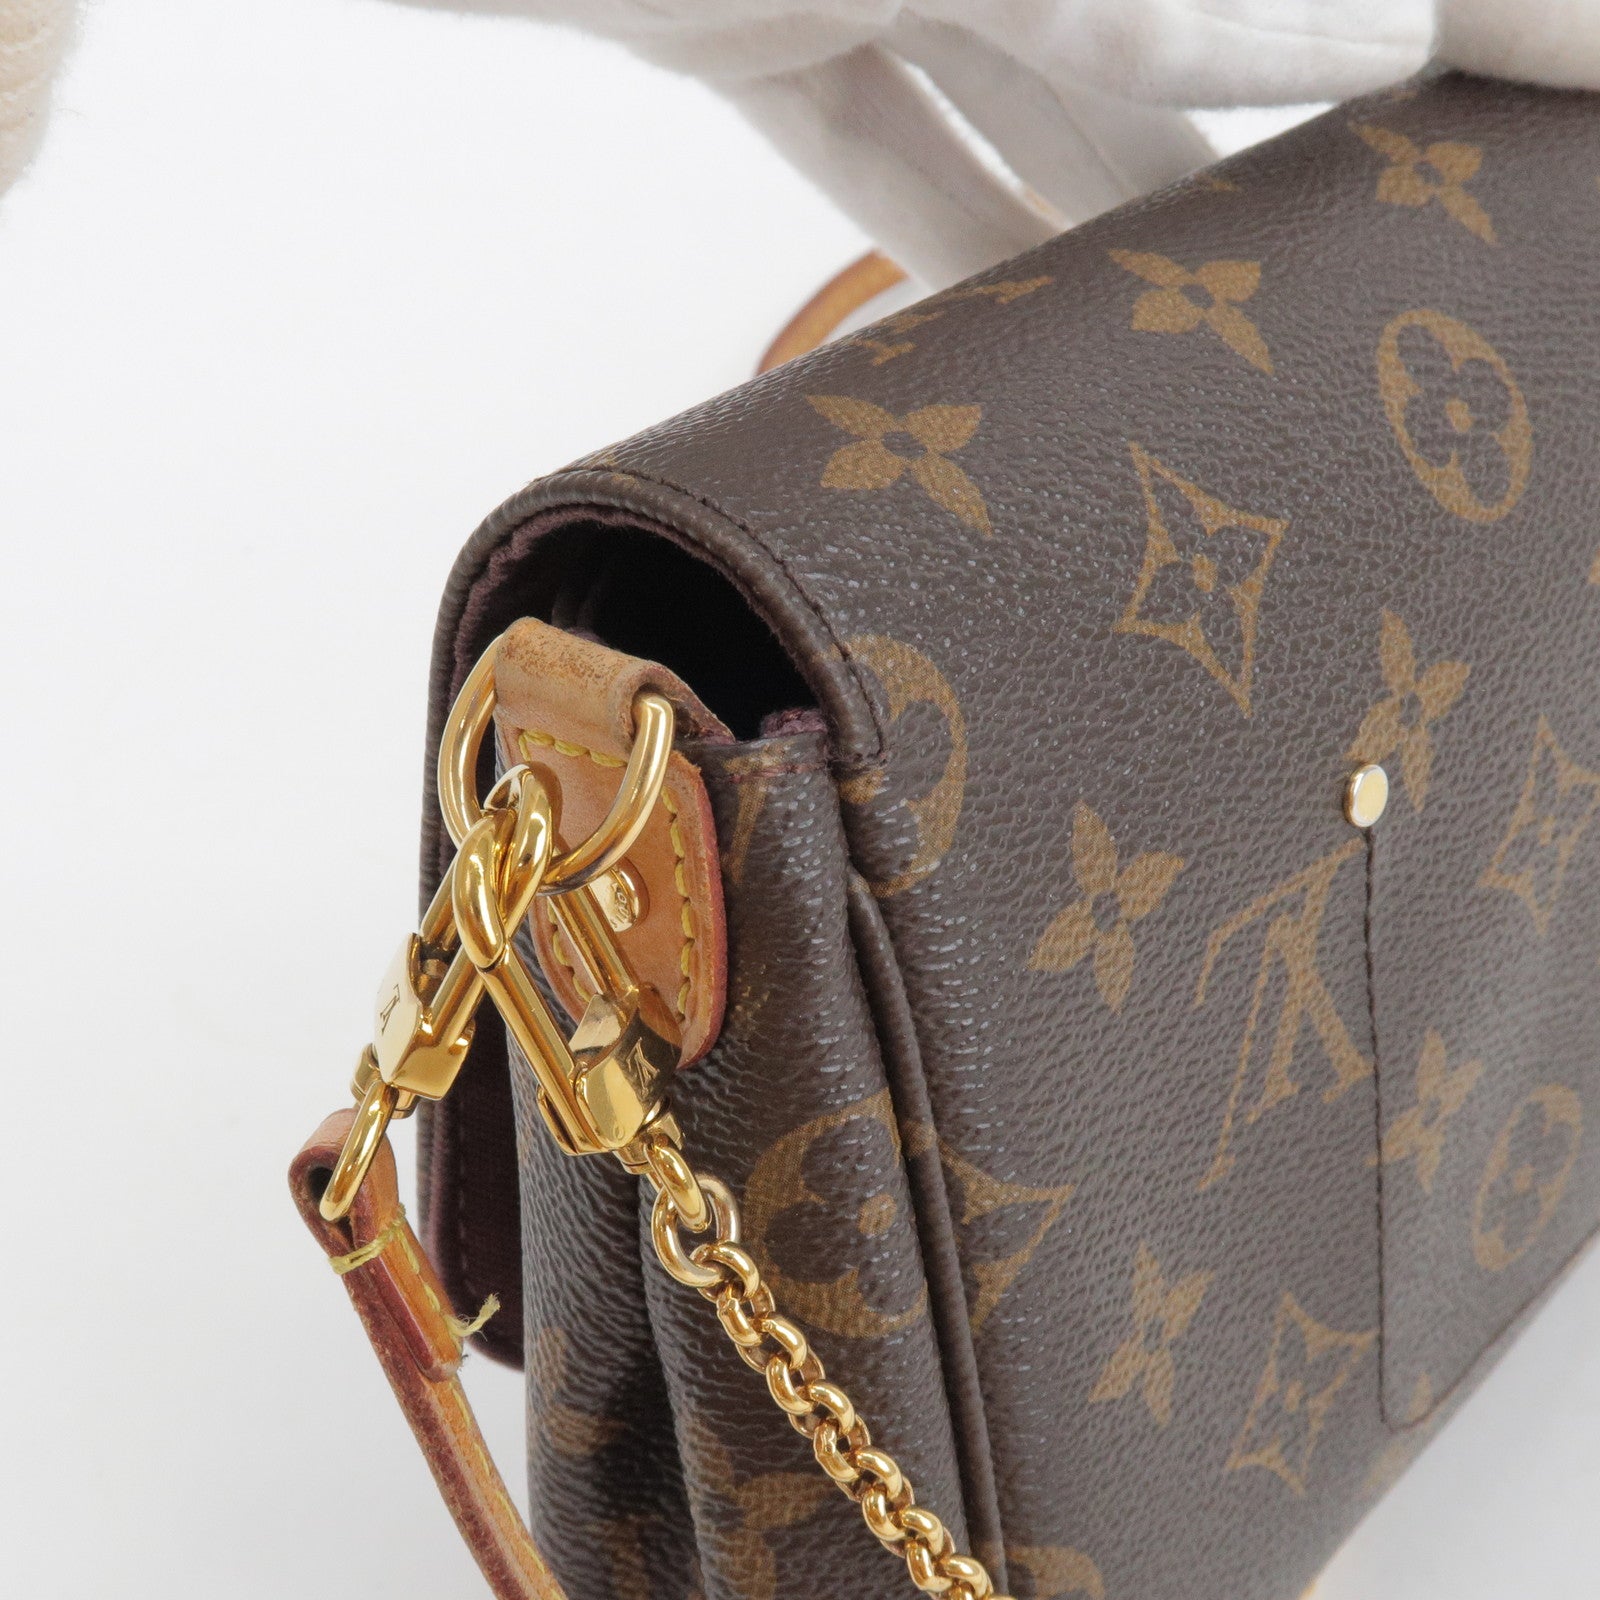 Buy Louis Vuitton Favorite MM Monogram Canvas M40718 Handbag